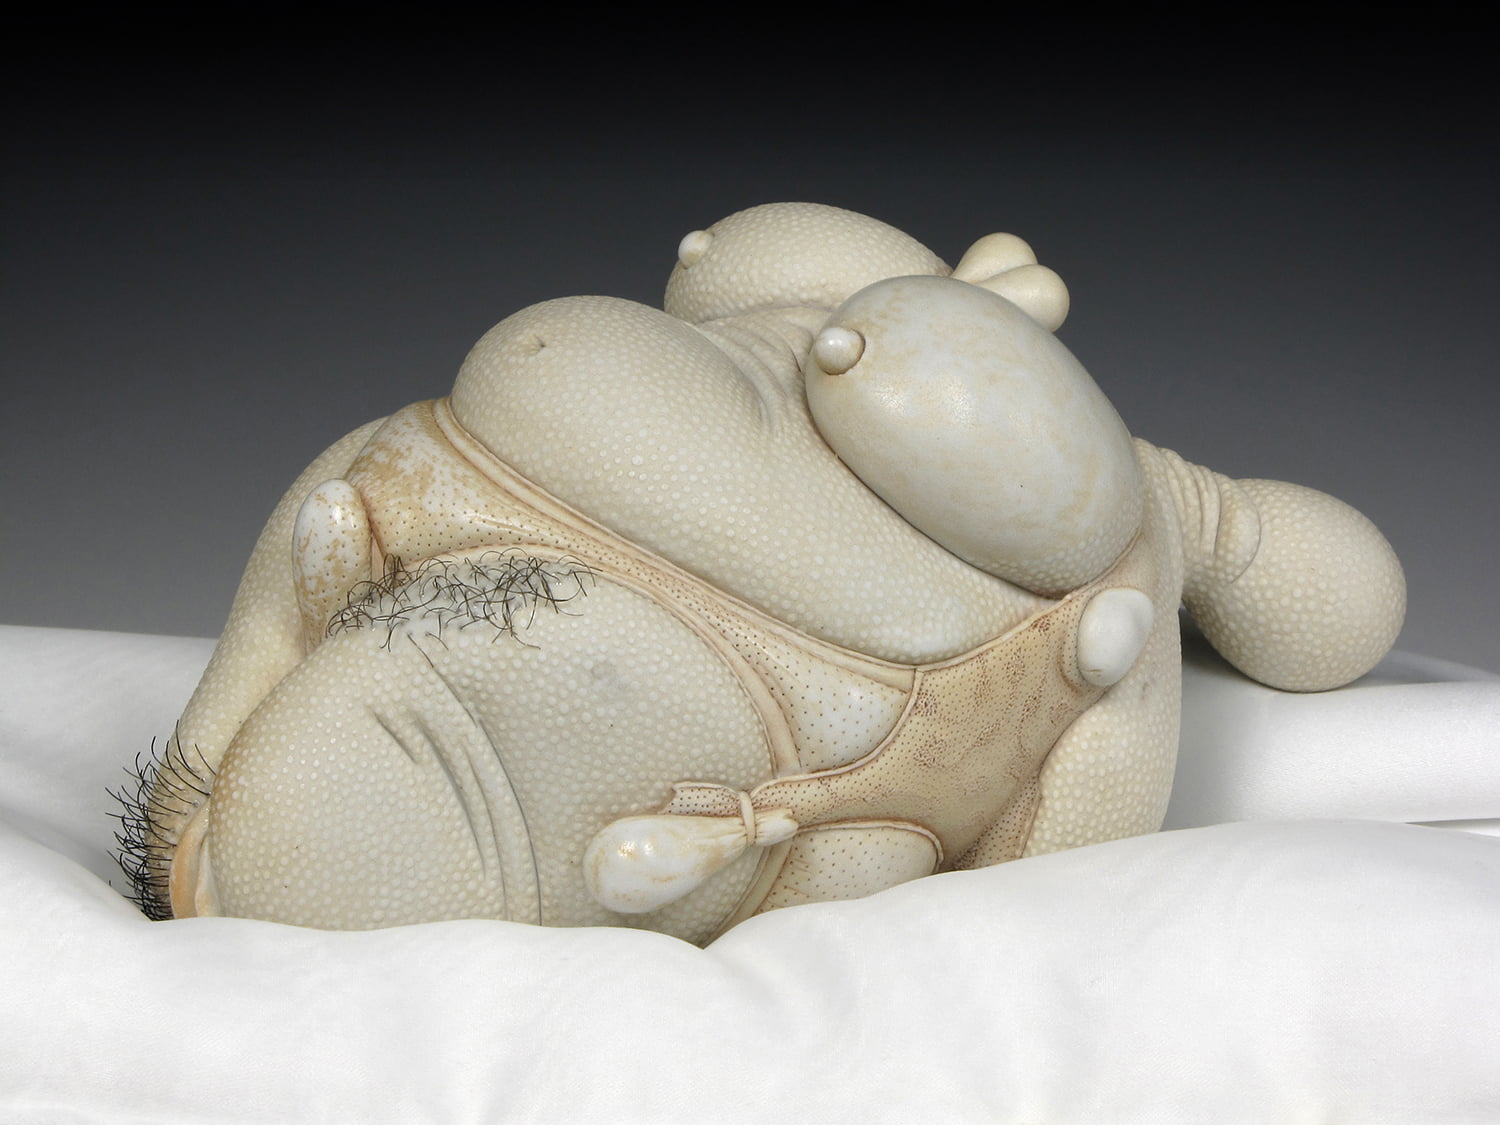 Jason Briggs "Pearl". Porcelain, hair, and mixed media sculptural ceramic art.